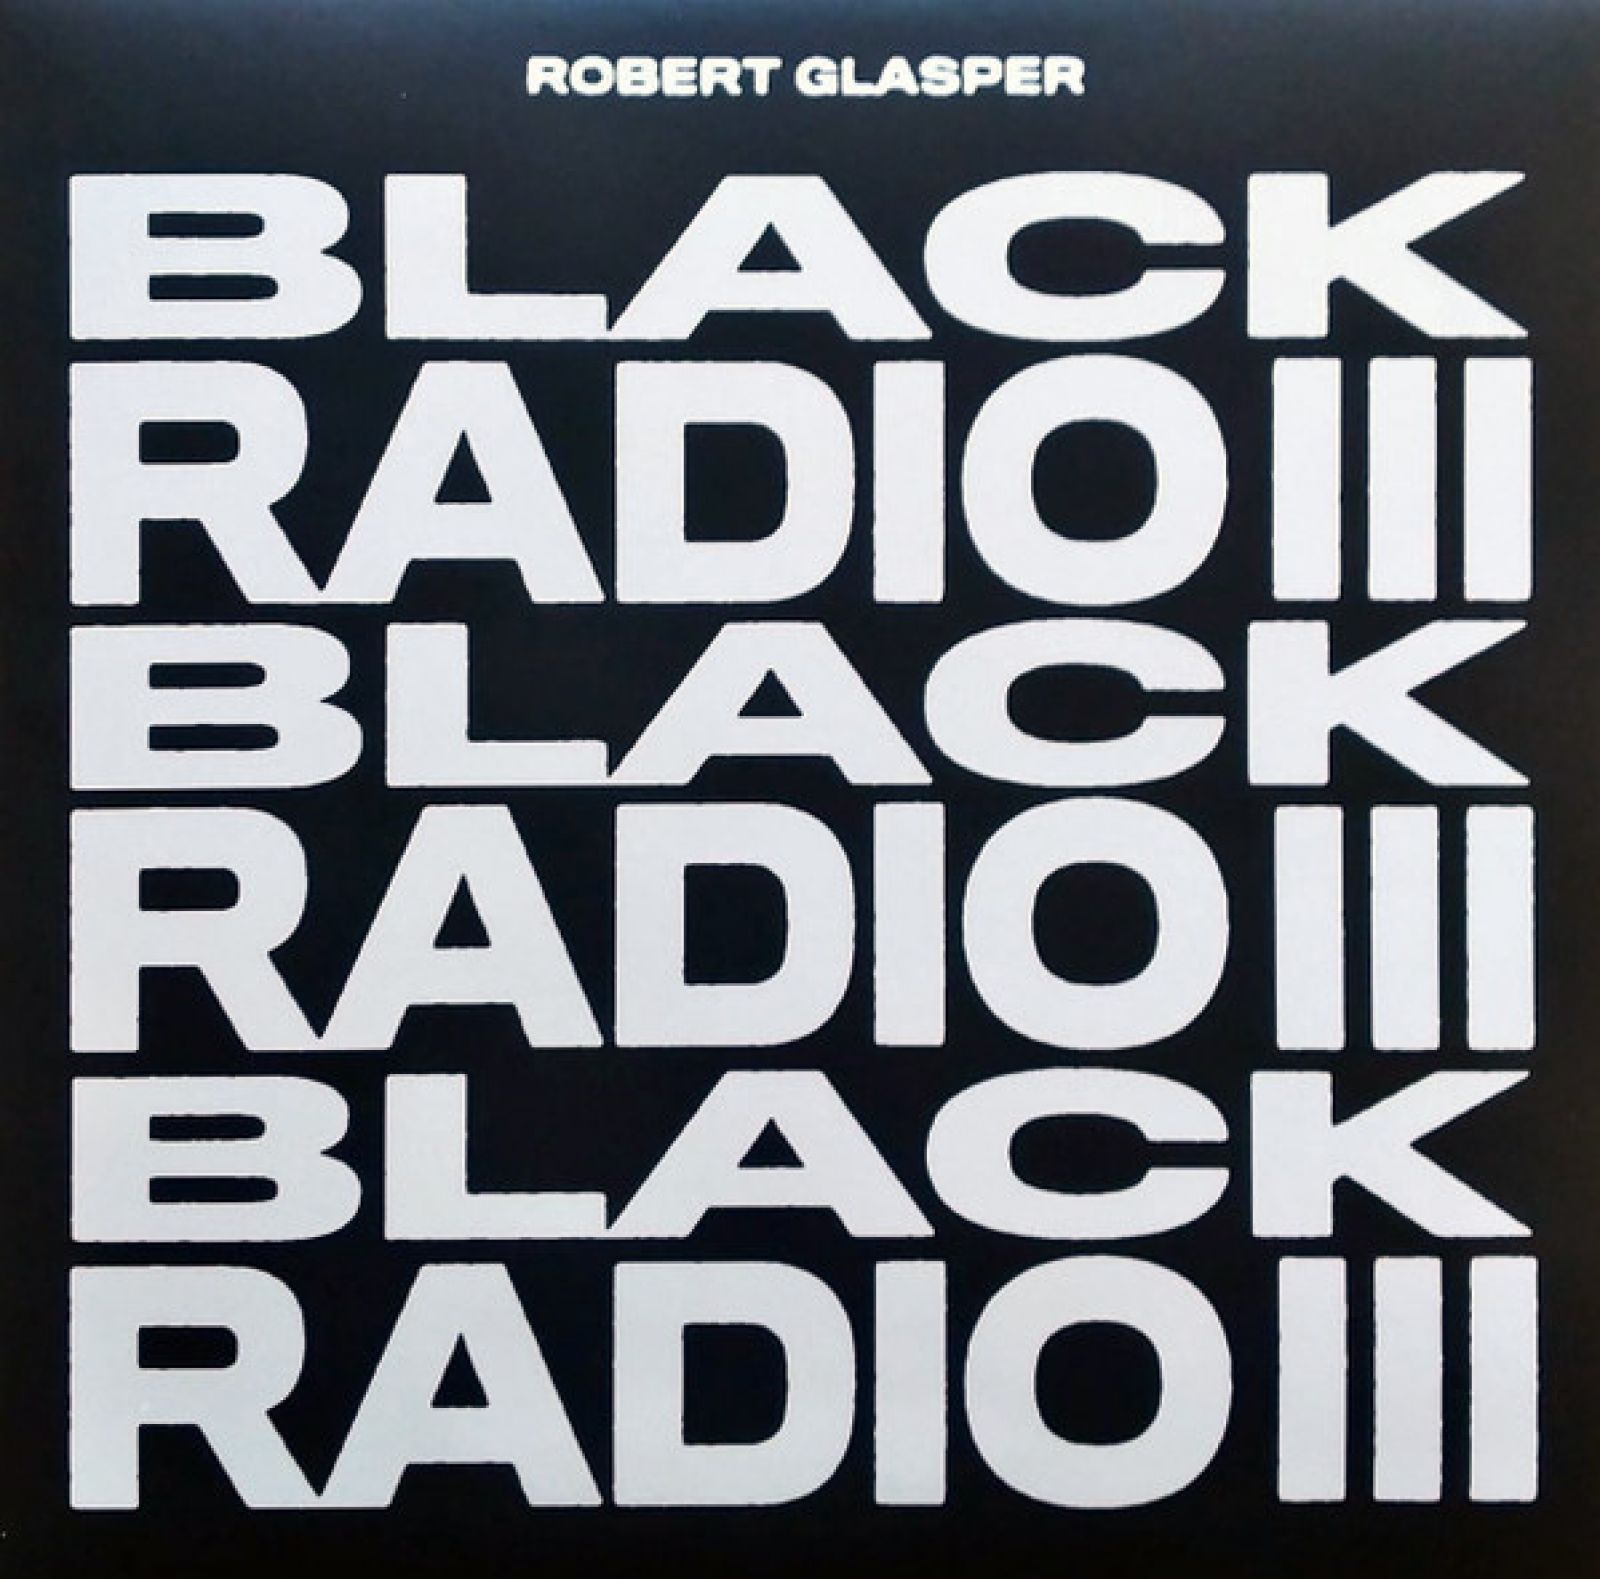 Виниловая пластинка Glasper, Robert, Black Radio III (0888072400313) esperanza spalding esperanza spalding 12 little spells 2 lp